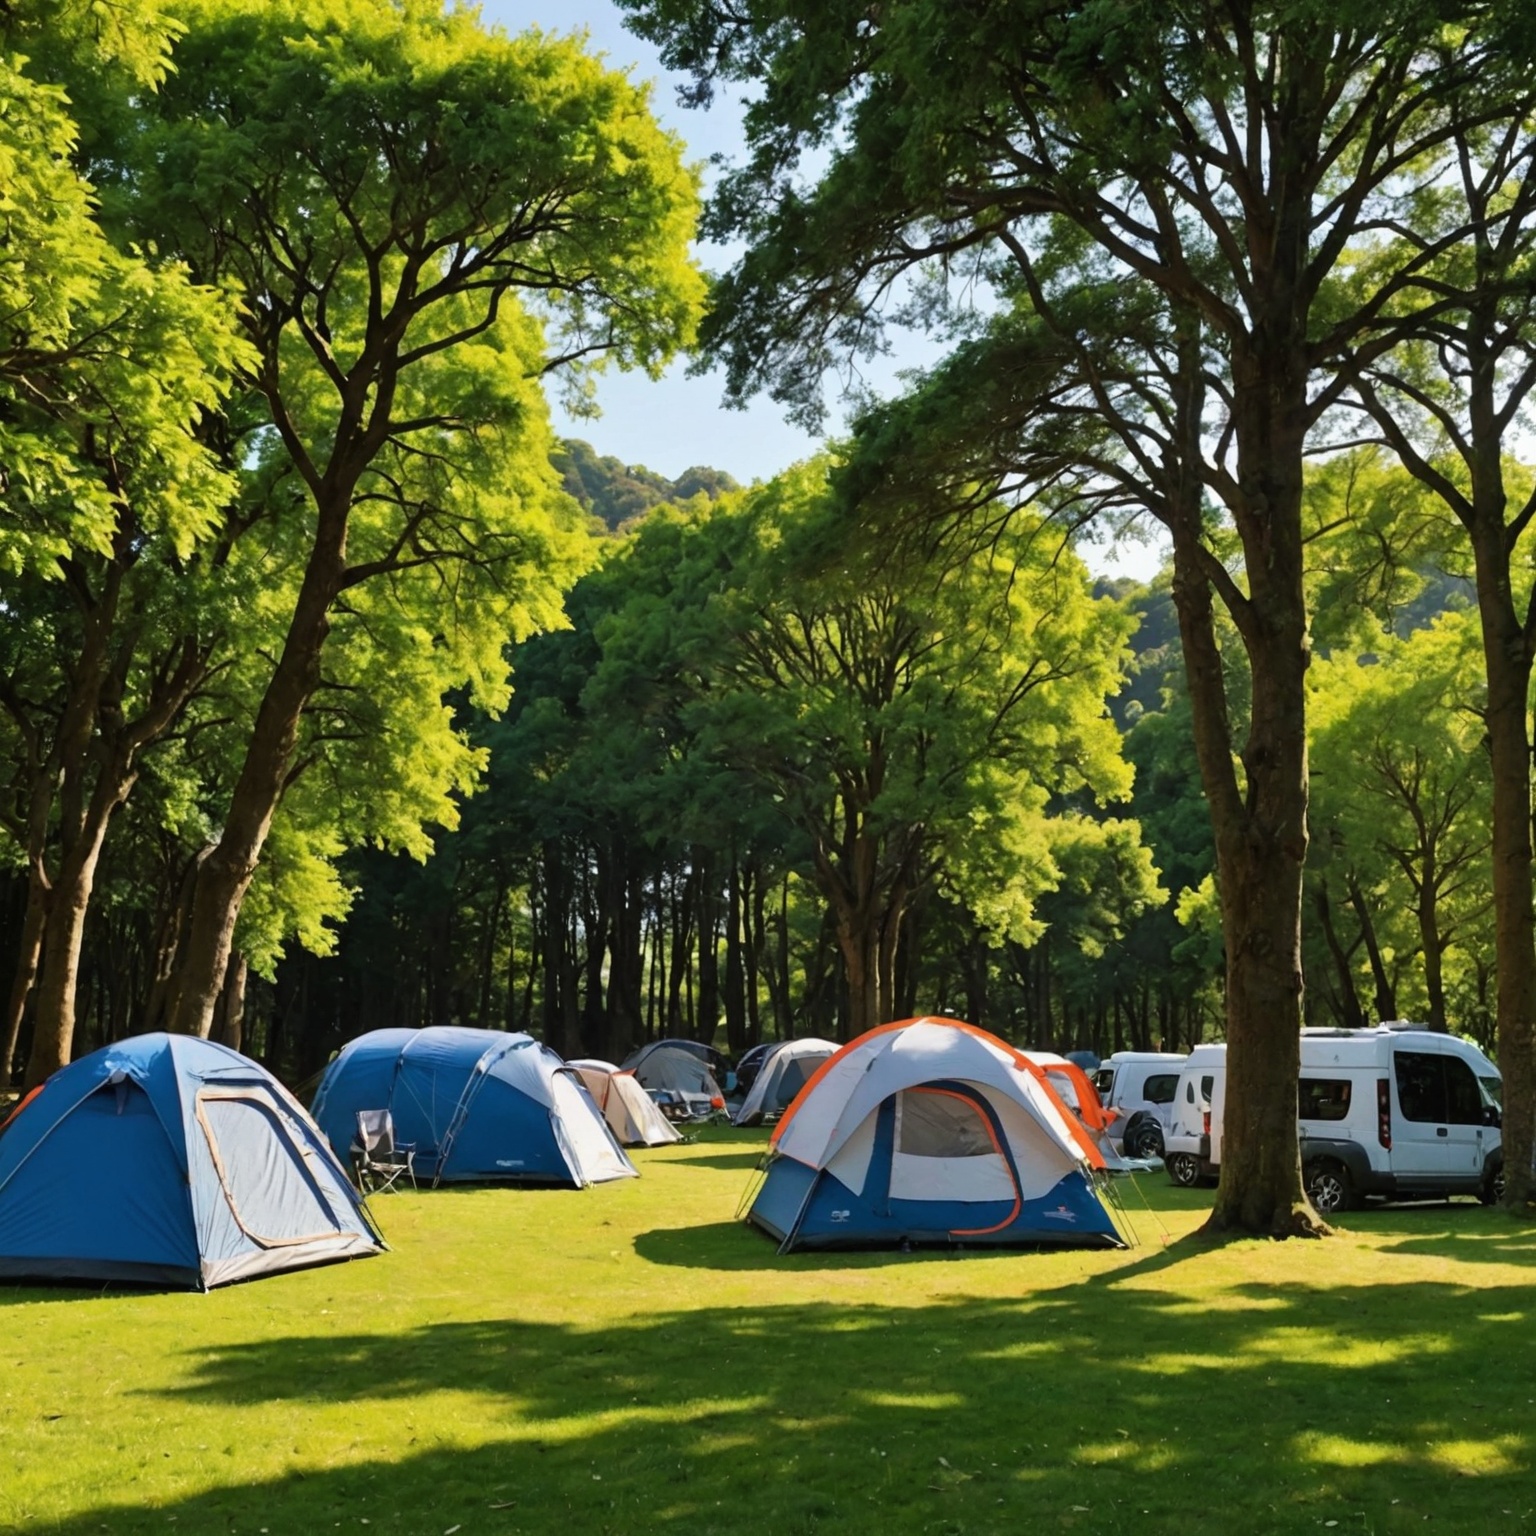 Choisir le Meilleur Camping à Hendaye : Conseils et Astuces Incontournables – AnnuCamping Guide